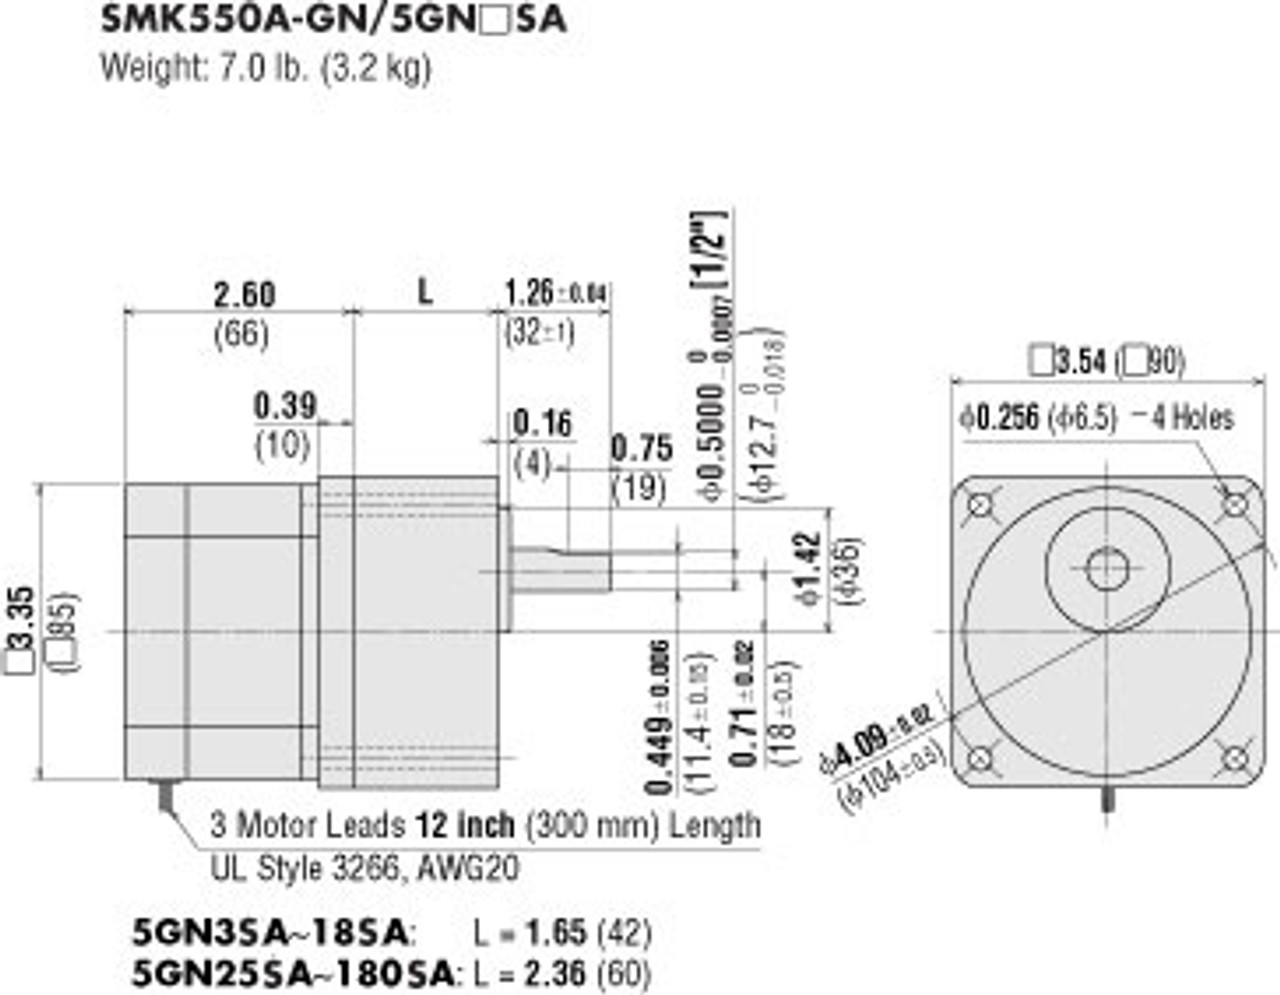 SMK550A-GN / 5GN9SA - Dimensions